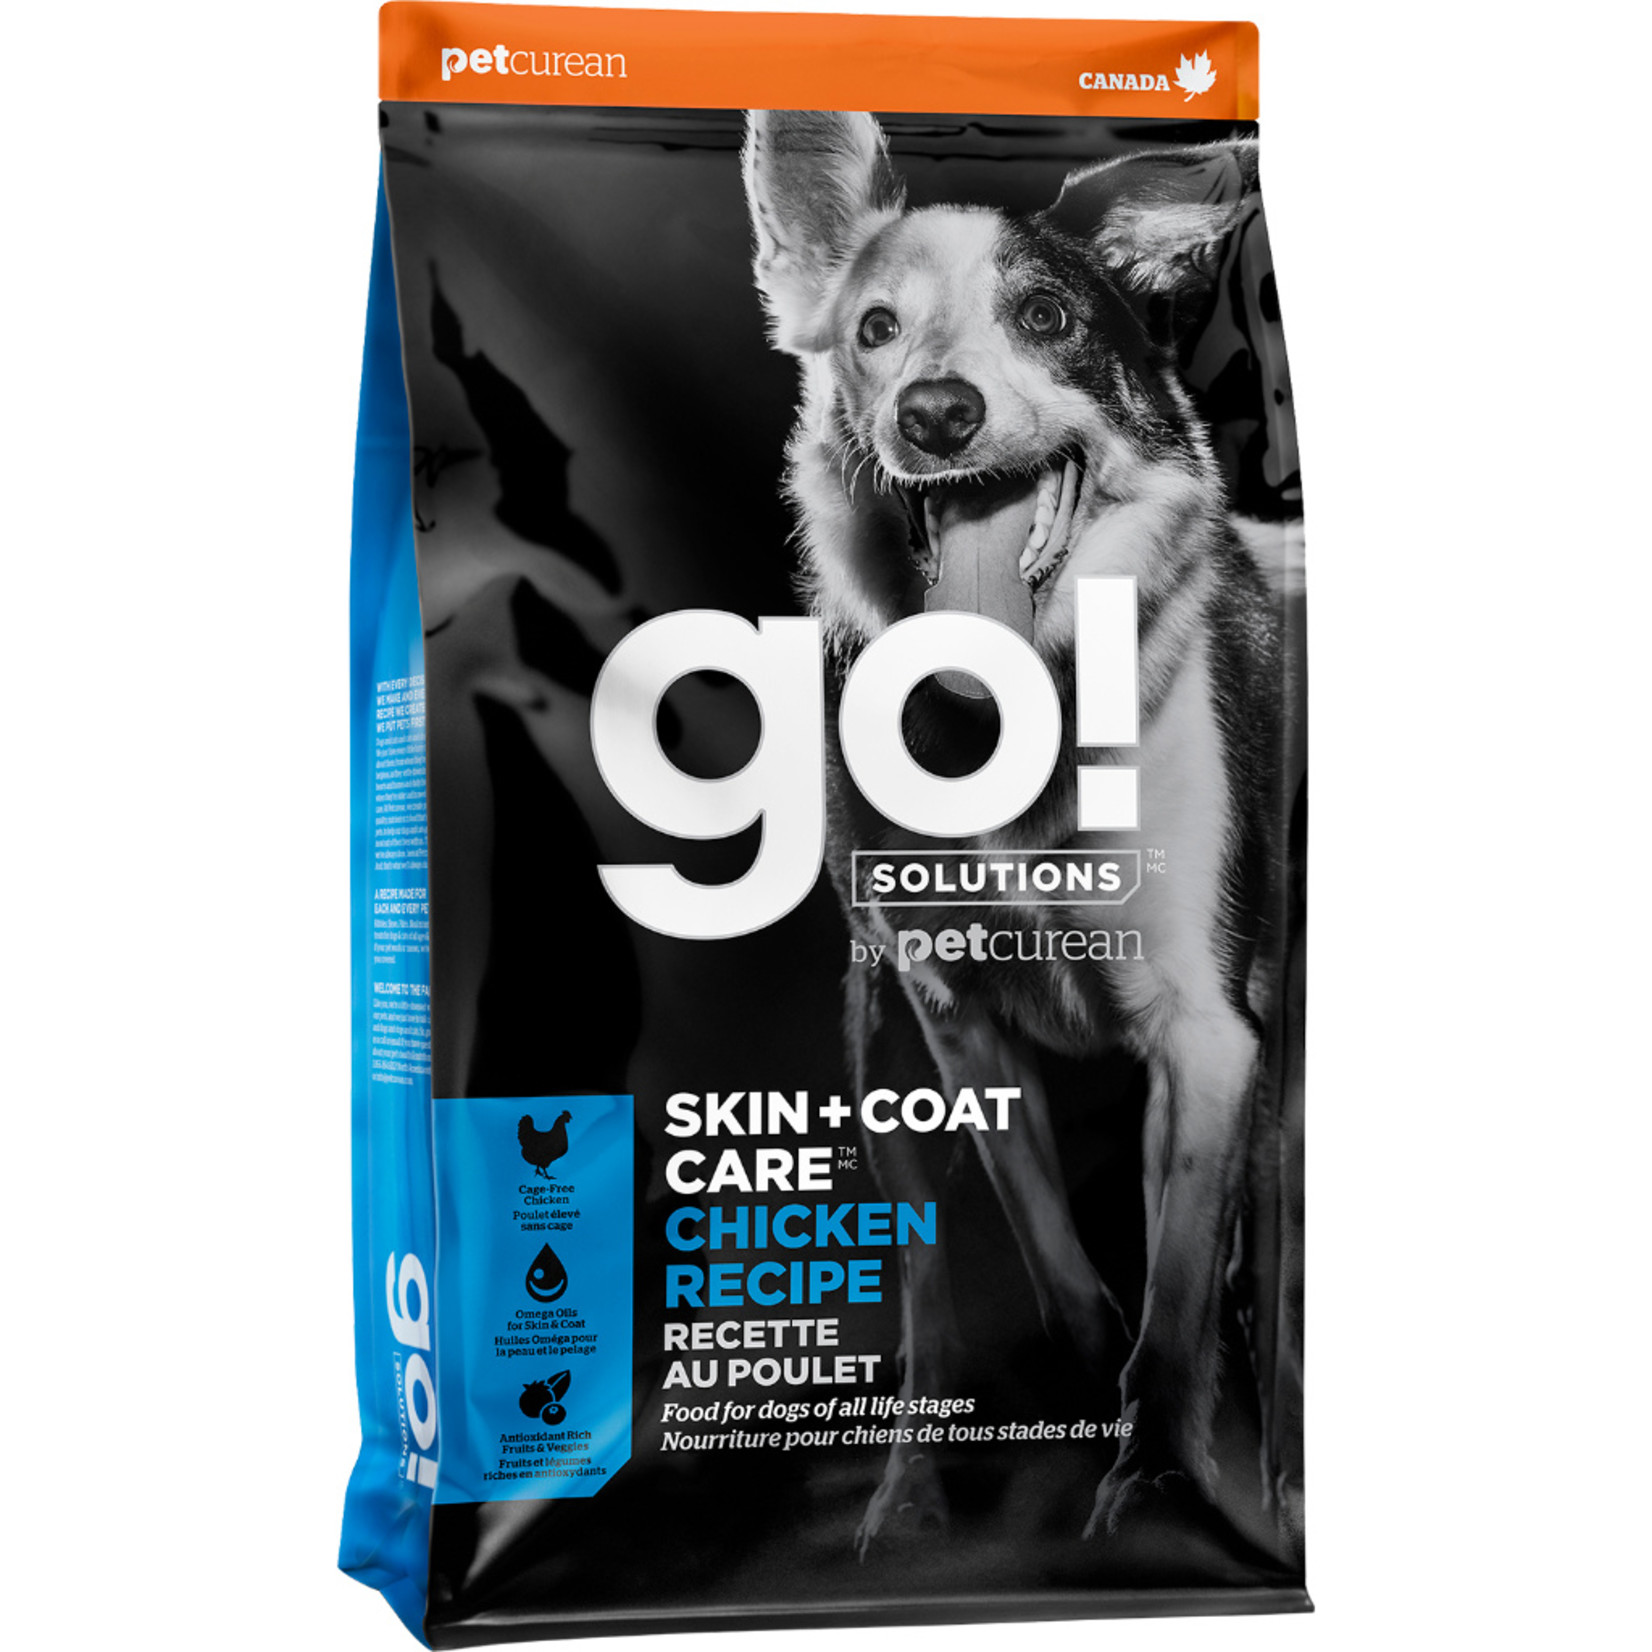 Go! Go! dog skin + coat care chicken recipe with grains